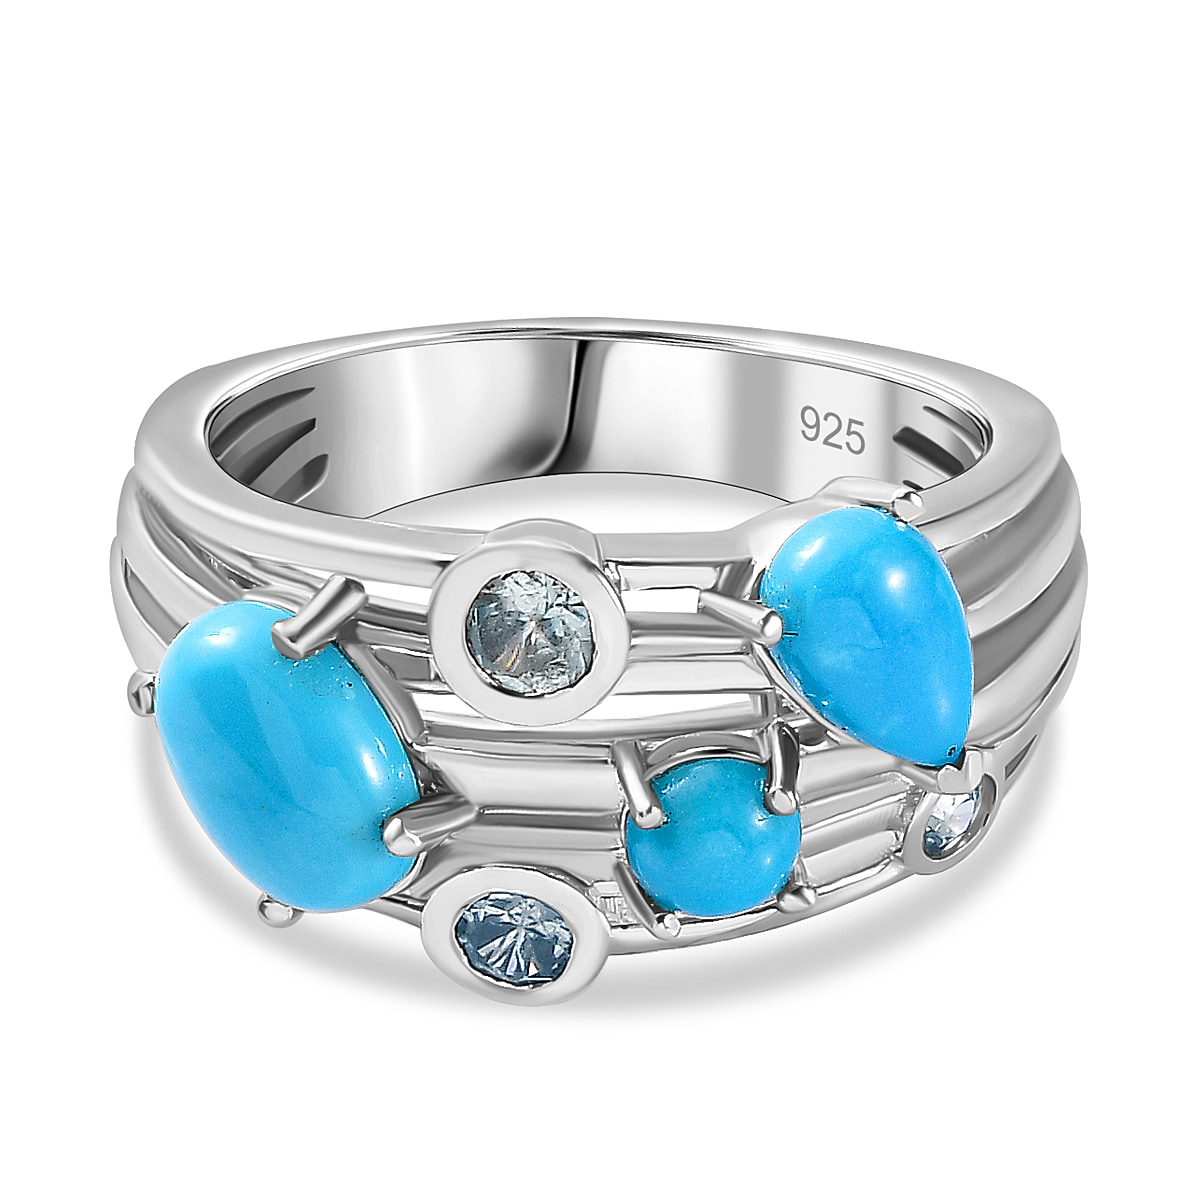 Arizona Sleeping Beauty Turquoise & Blue Zircon Multi Row Ring in Platinum Overlay Sterling Silver 1.85 Ct